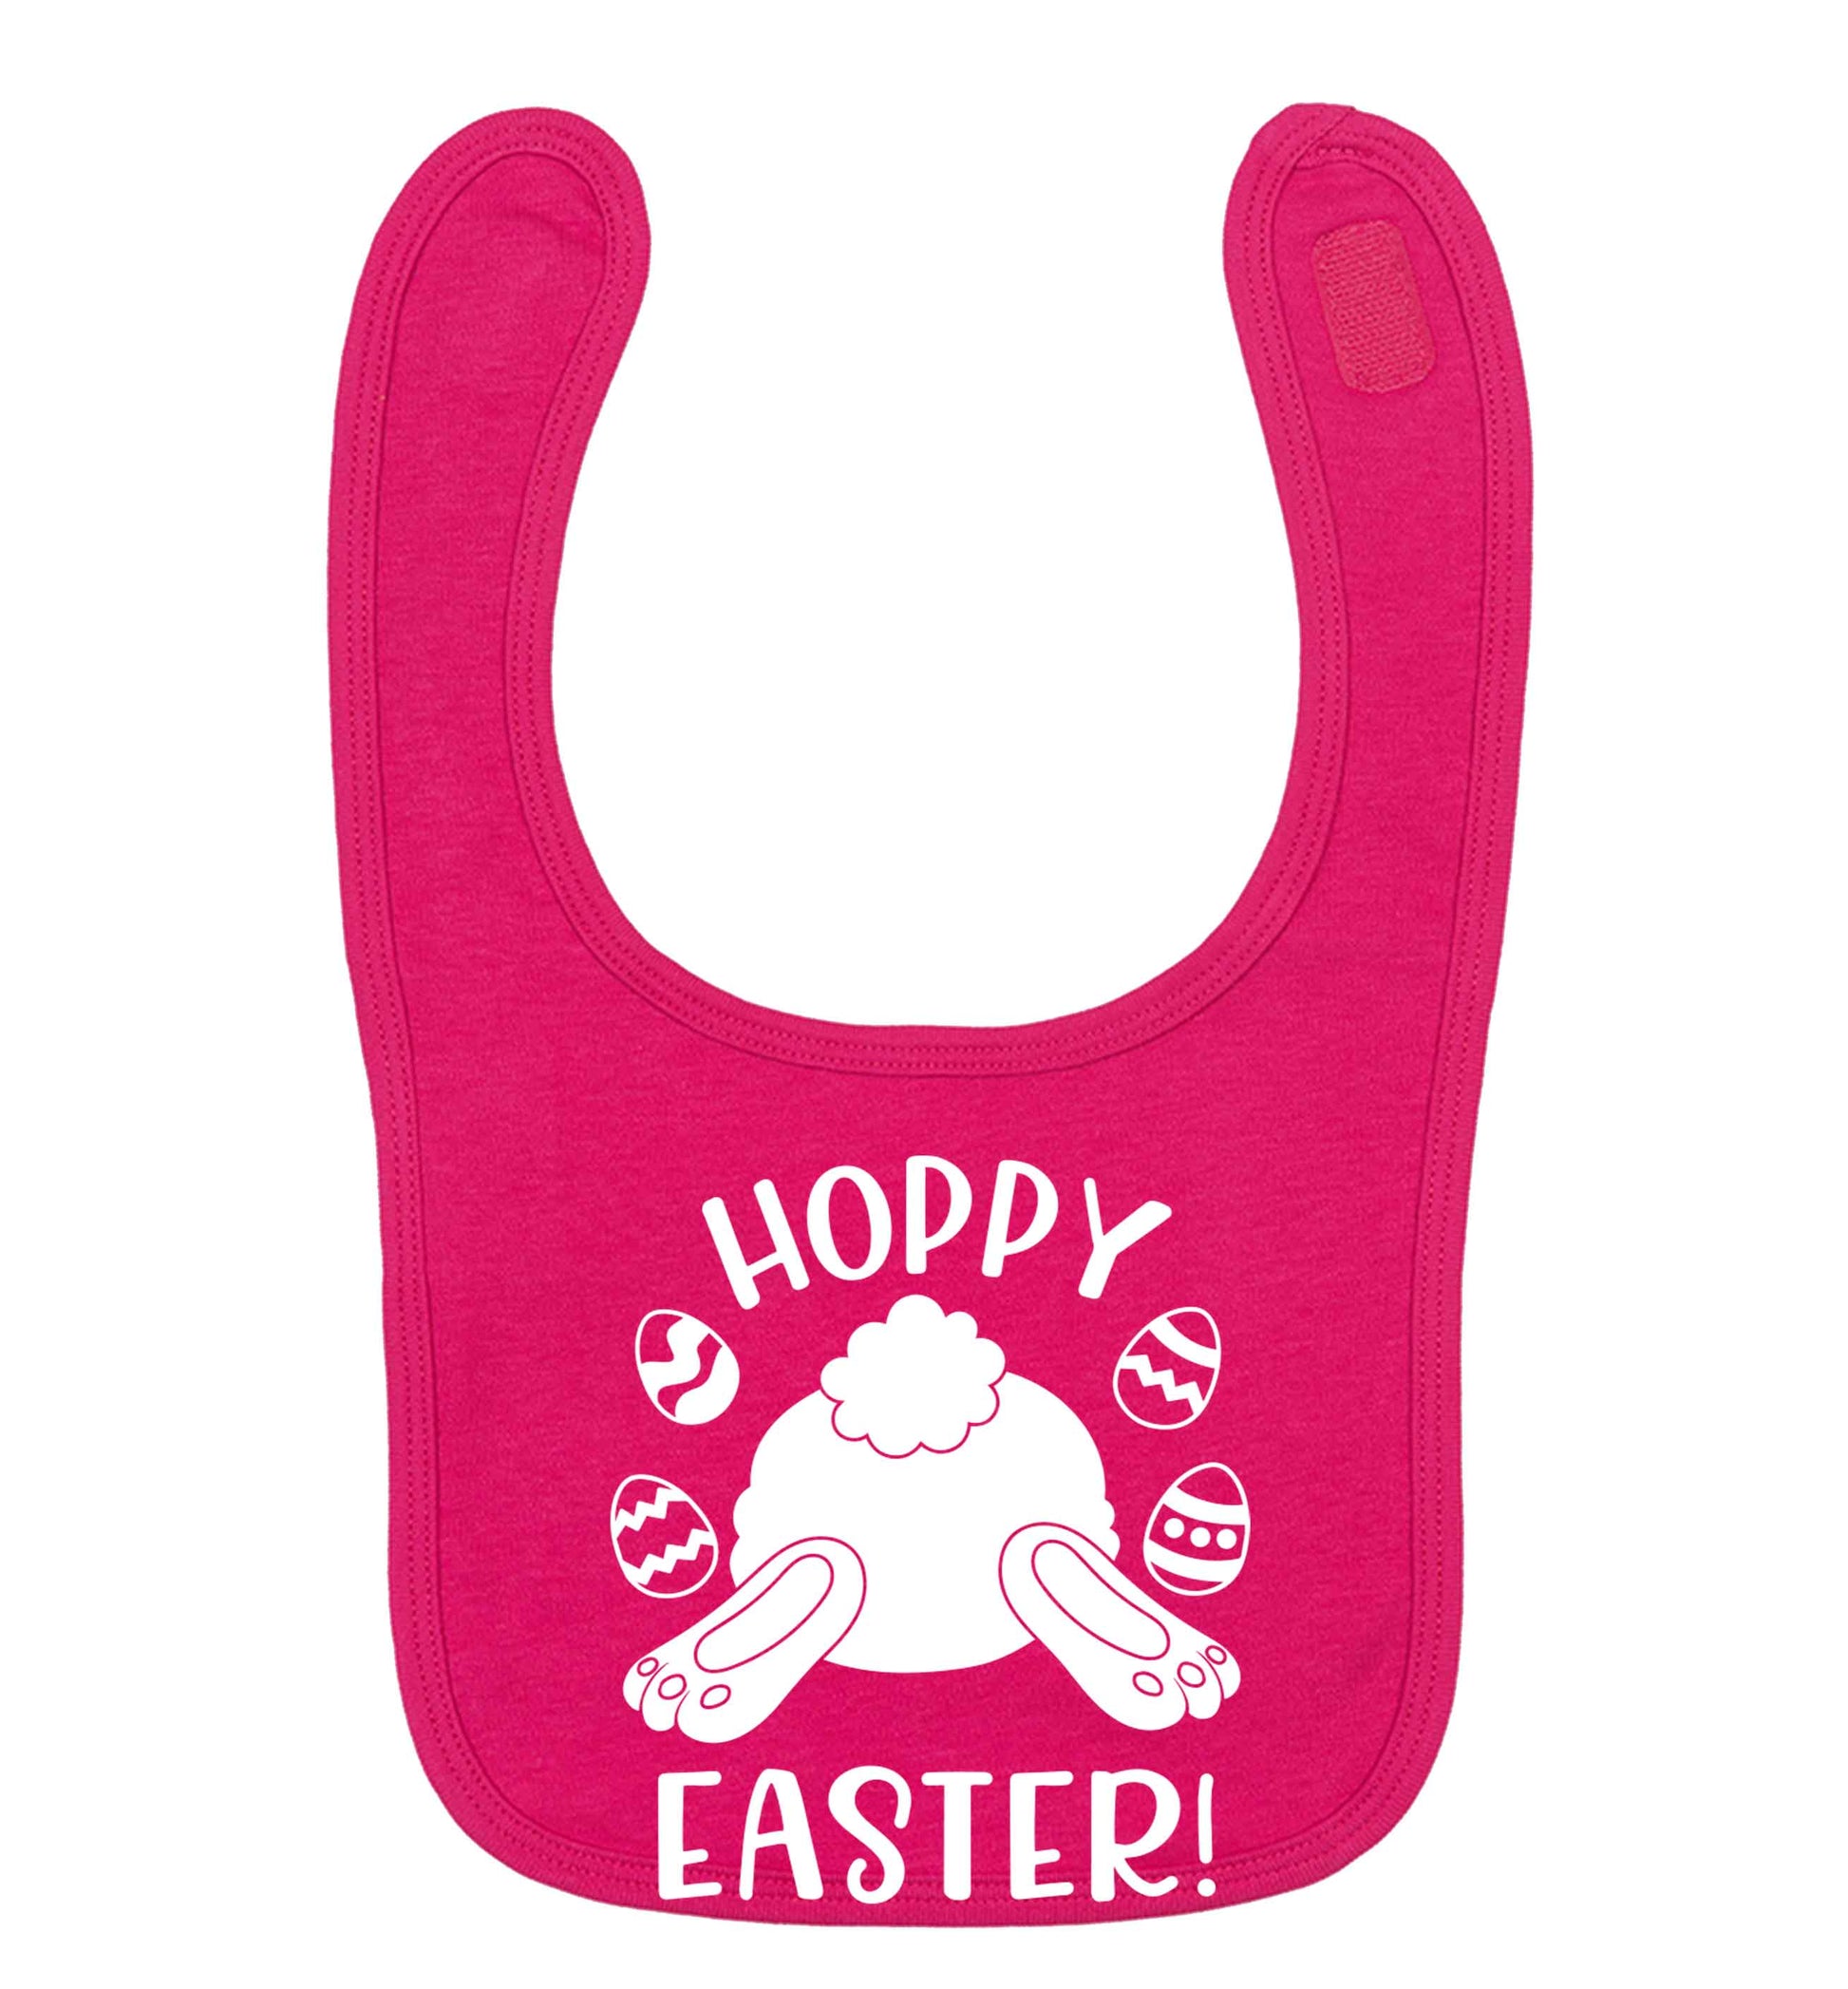 Hoppy Easter dark pink baby bib